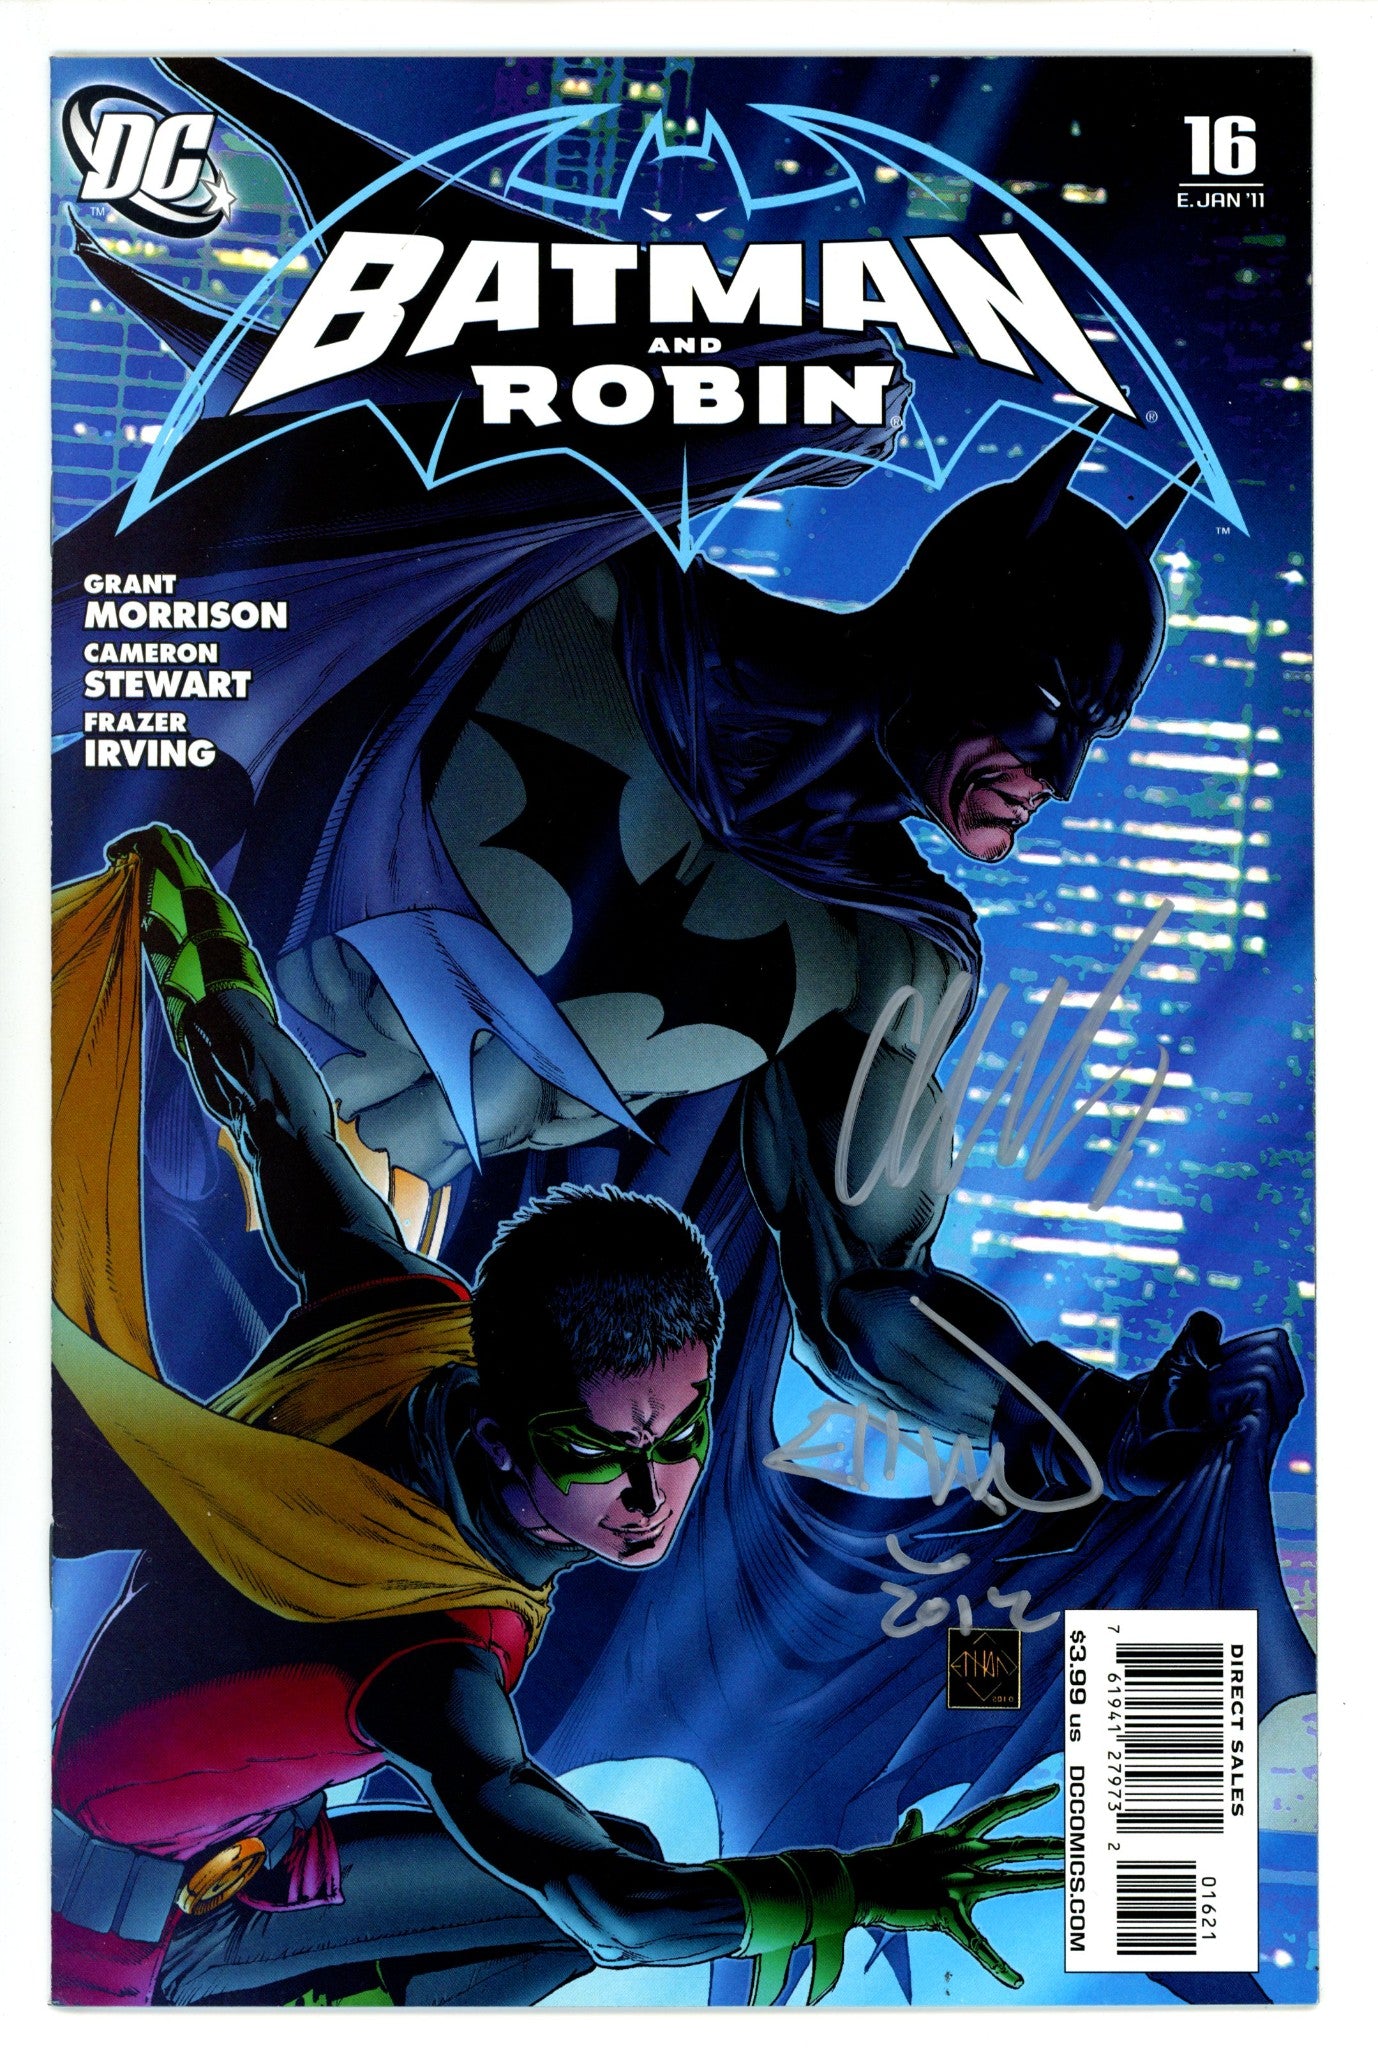 Batman and Robin Vol 1 16 VF+ (8.5) (2011) Sciver Variant Signed x2 Cover Ethan Van Sciver & Cameron Stewart 